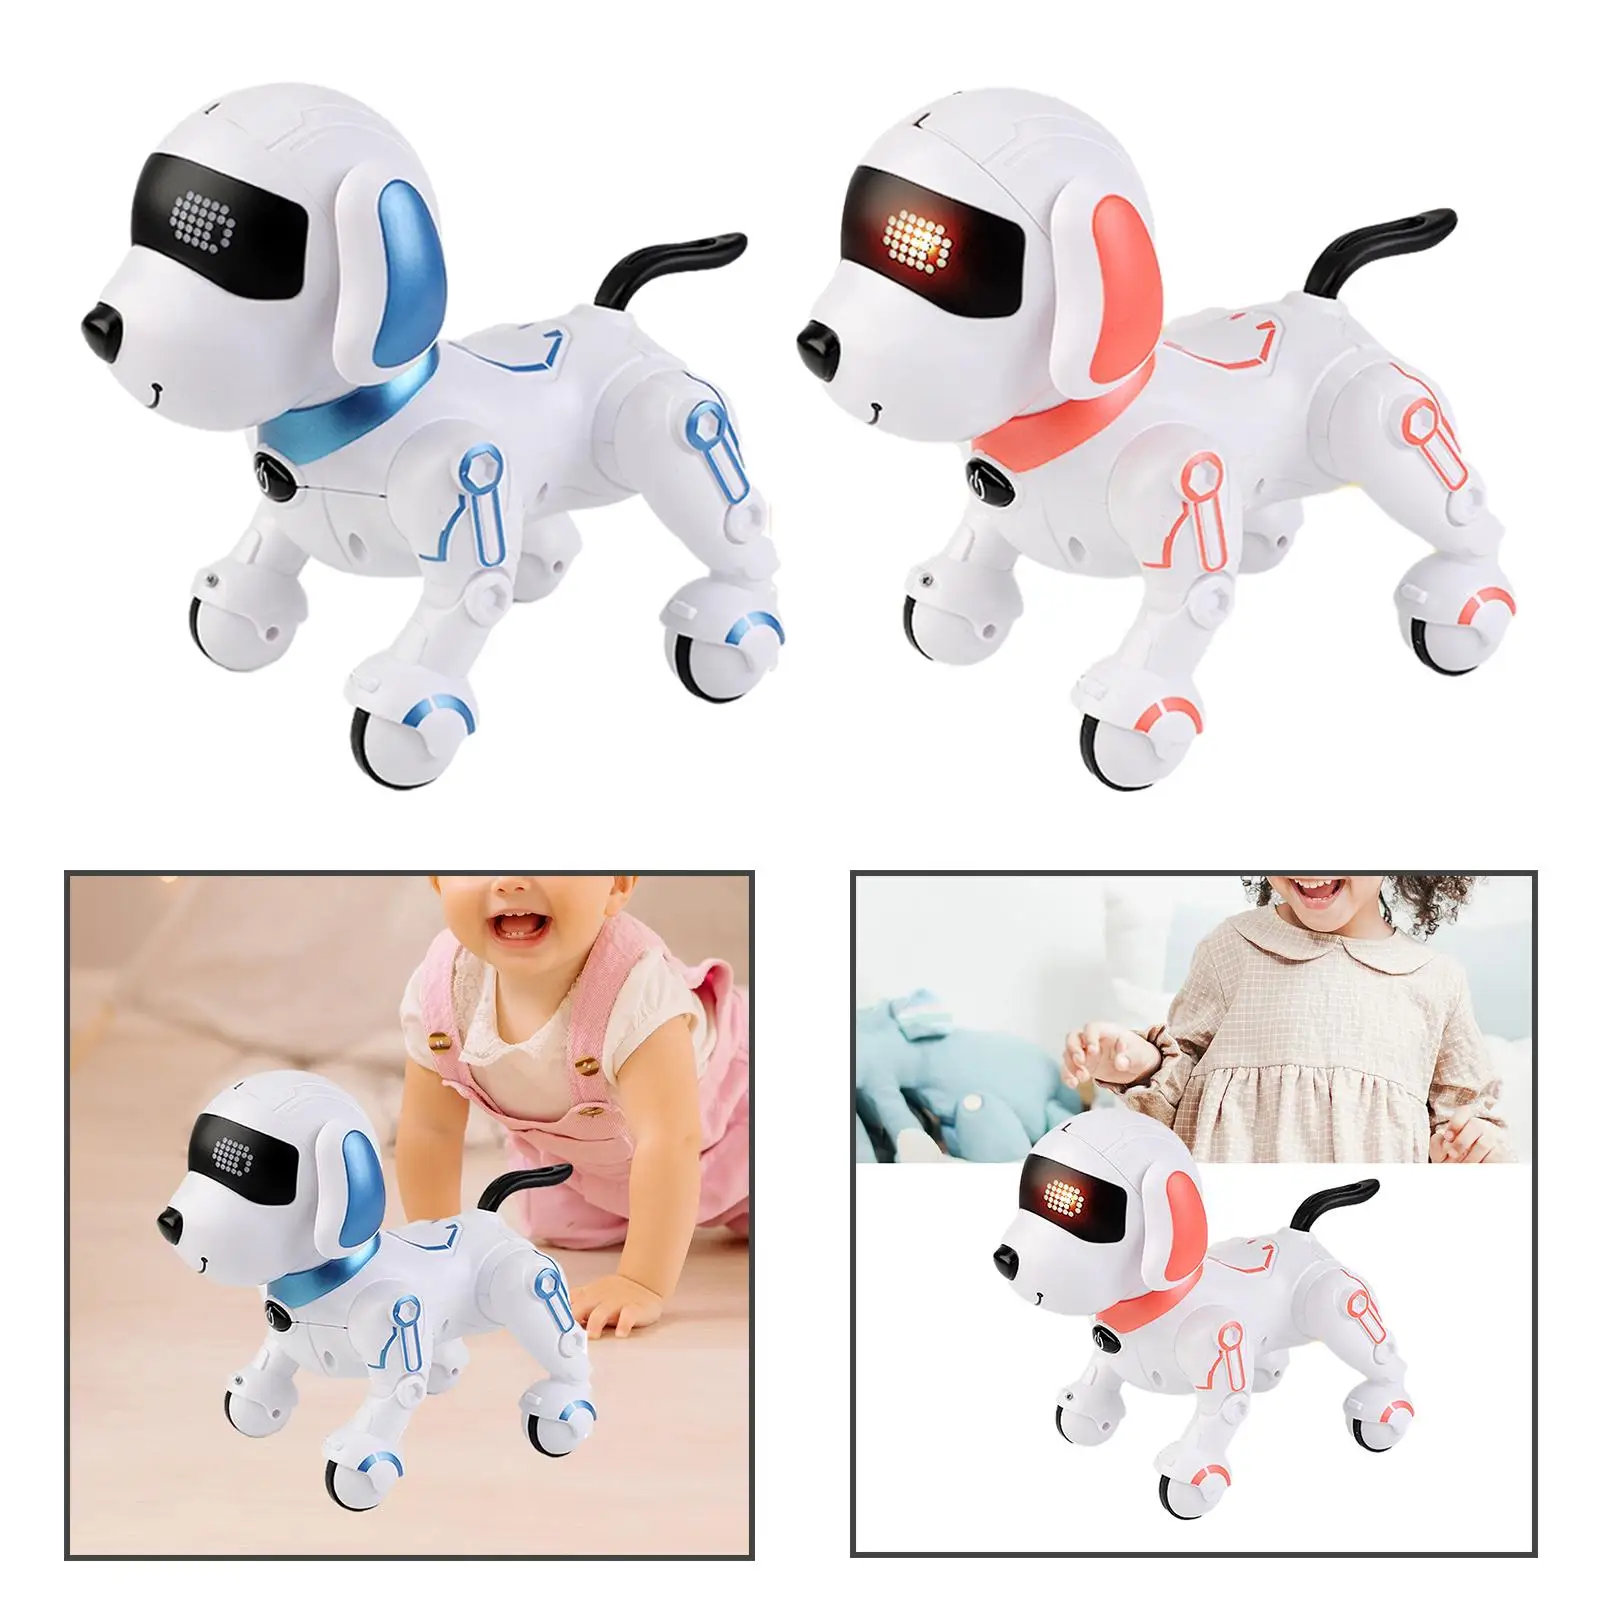 Remote Control Robot Dog Programming Pet Dog Robot Dancing RC Robot Dog Electronic Pet Toy for Children Kids Boys and Girls